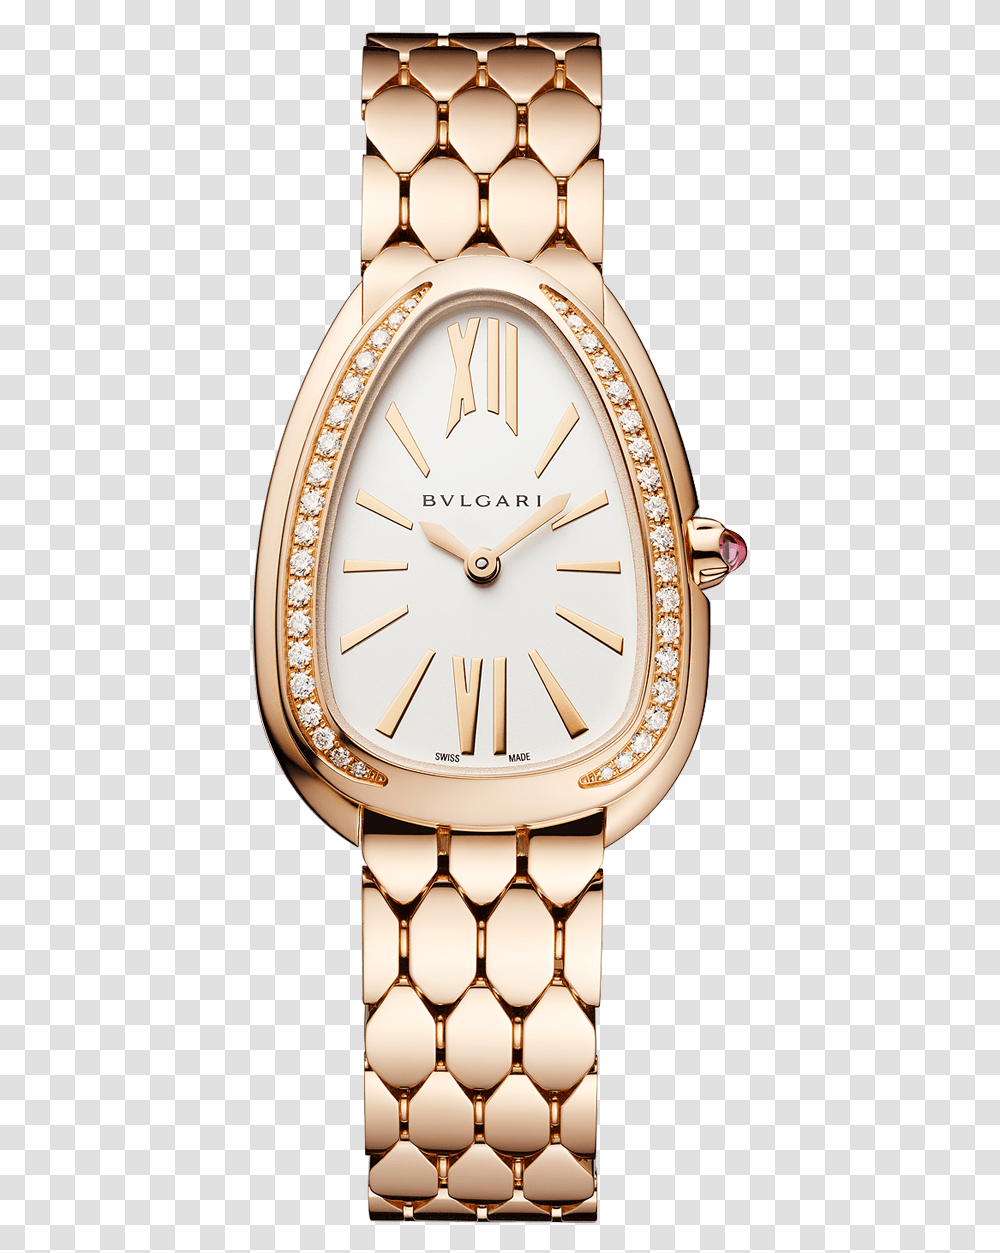 Bvlgari Serpenti Seduttori 18k Rose Gold Amp Diamonds Patek 7300 1200r, Wristwatch, Analog Clock, Clock Tower, Architecture Transparent Png